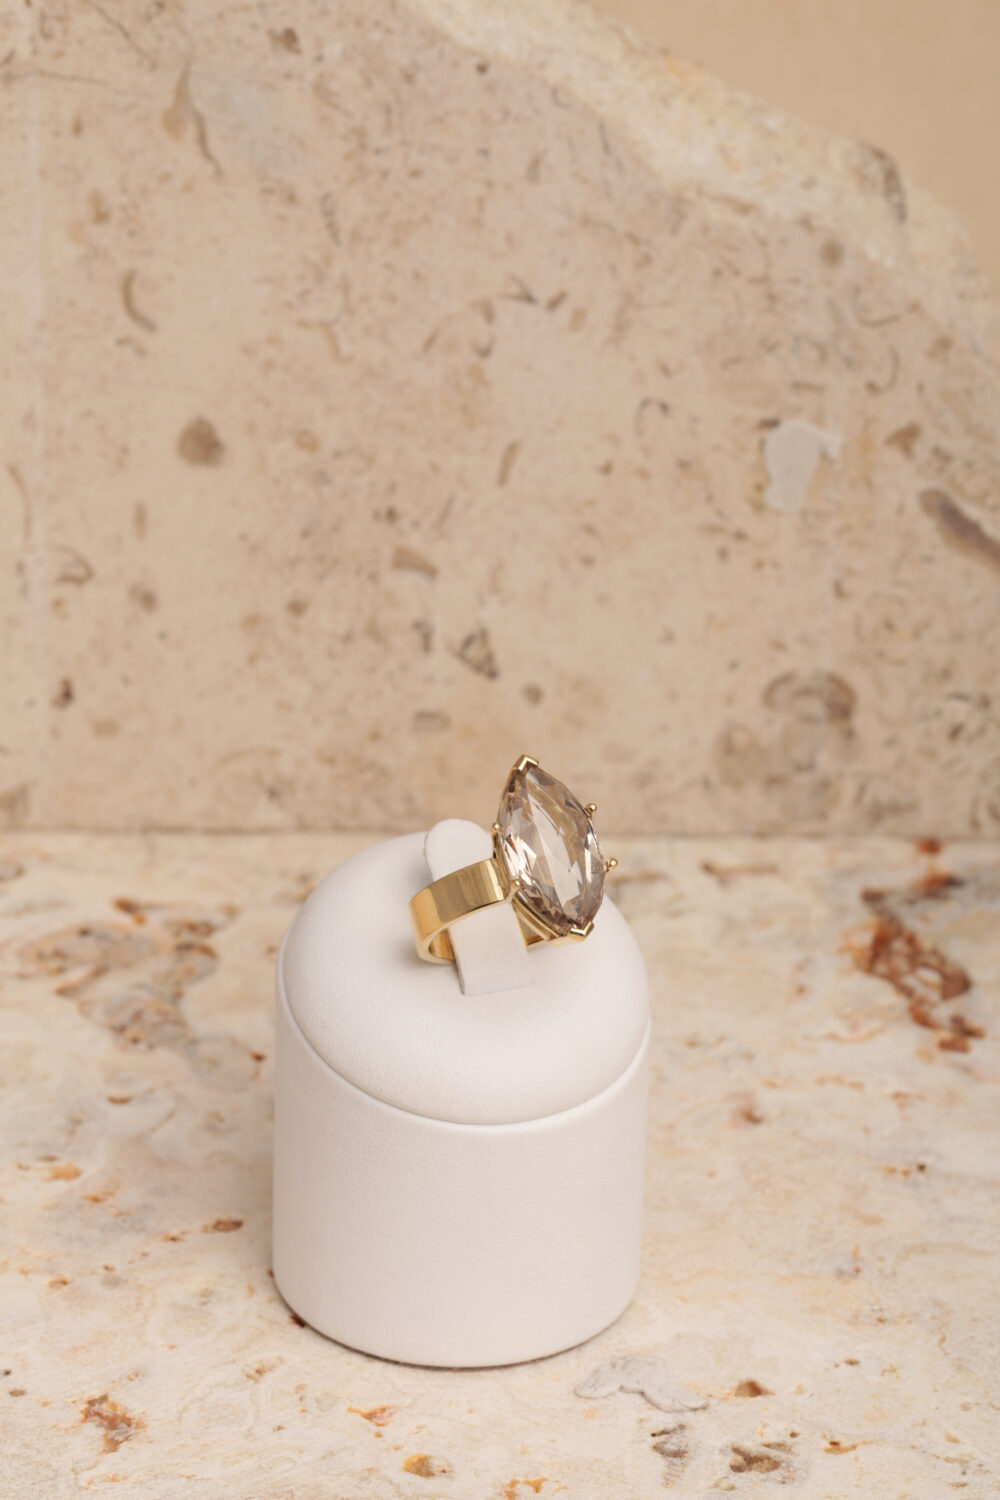 18-karat yellow gold ring set with a marquise-cut smoky quartz gemstone.